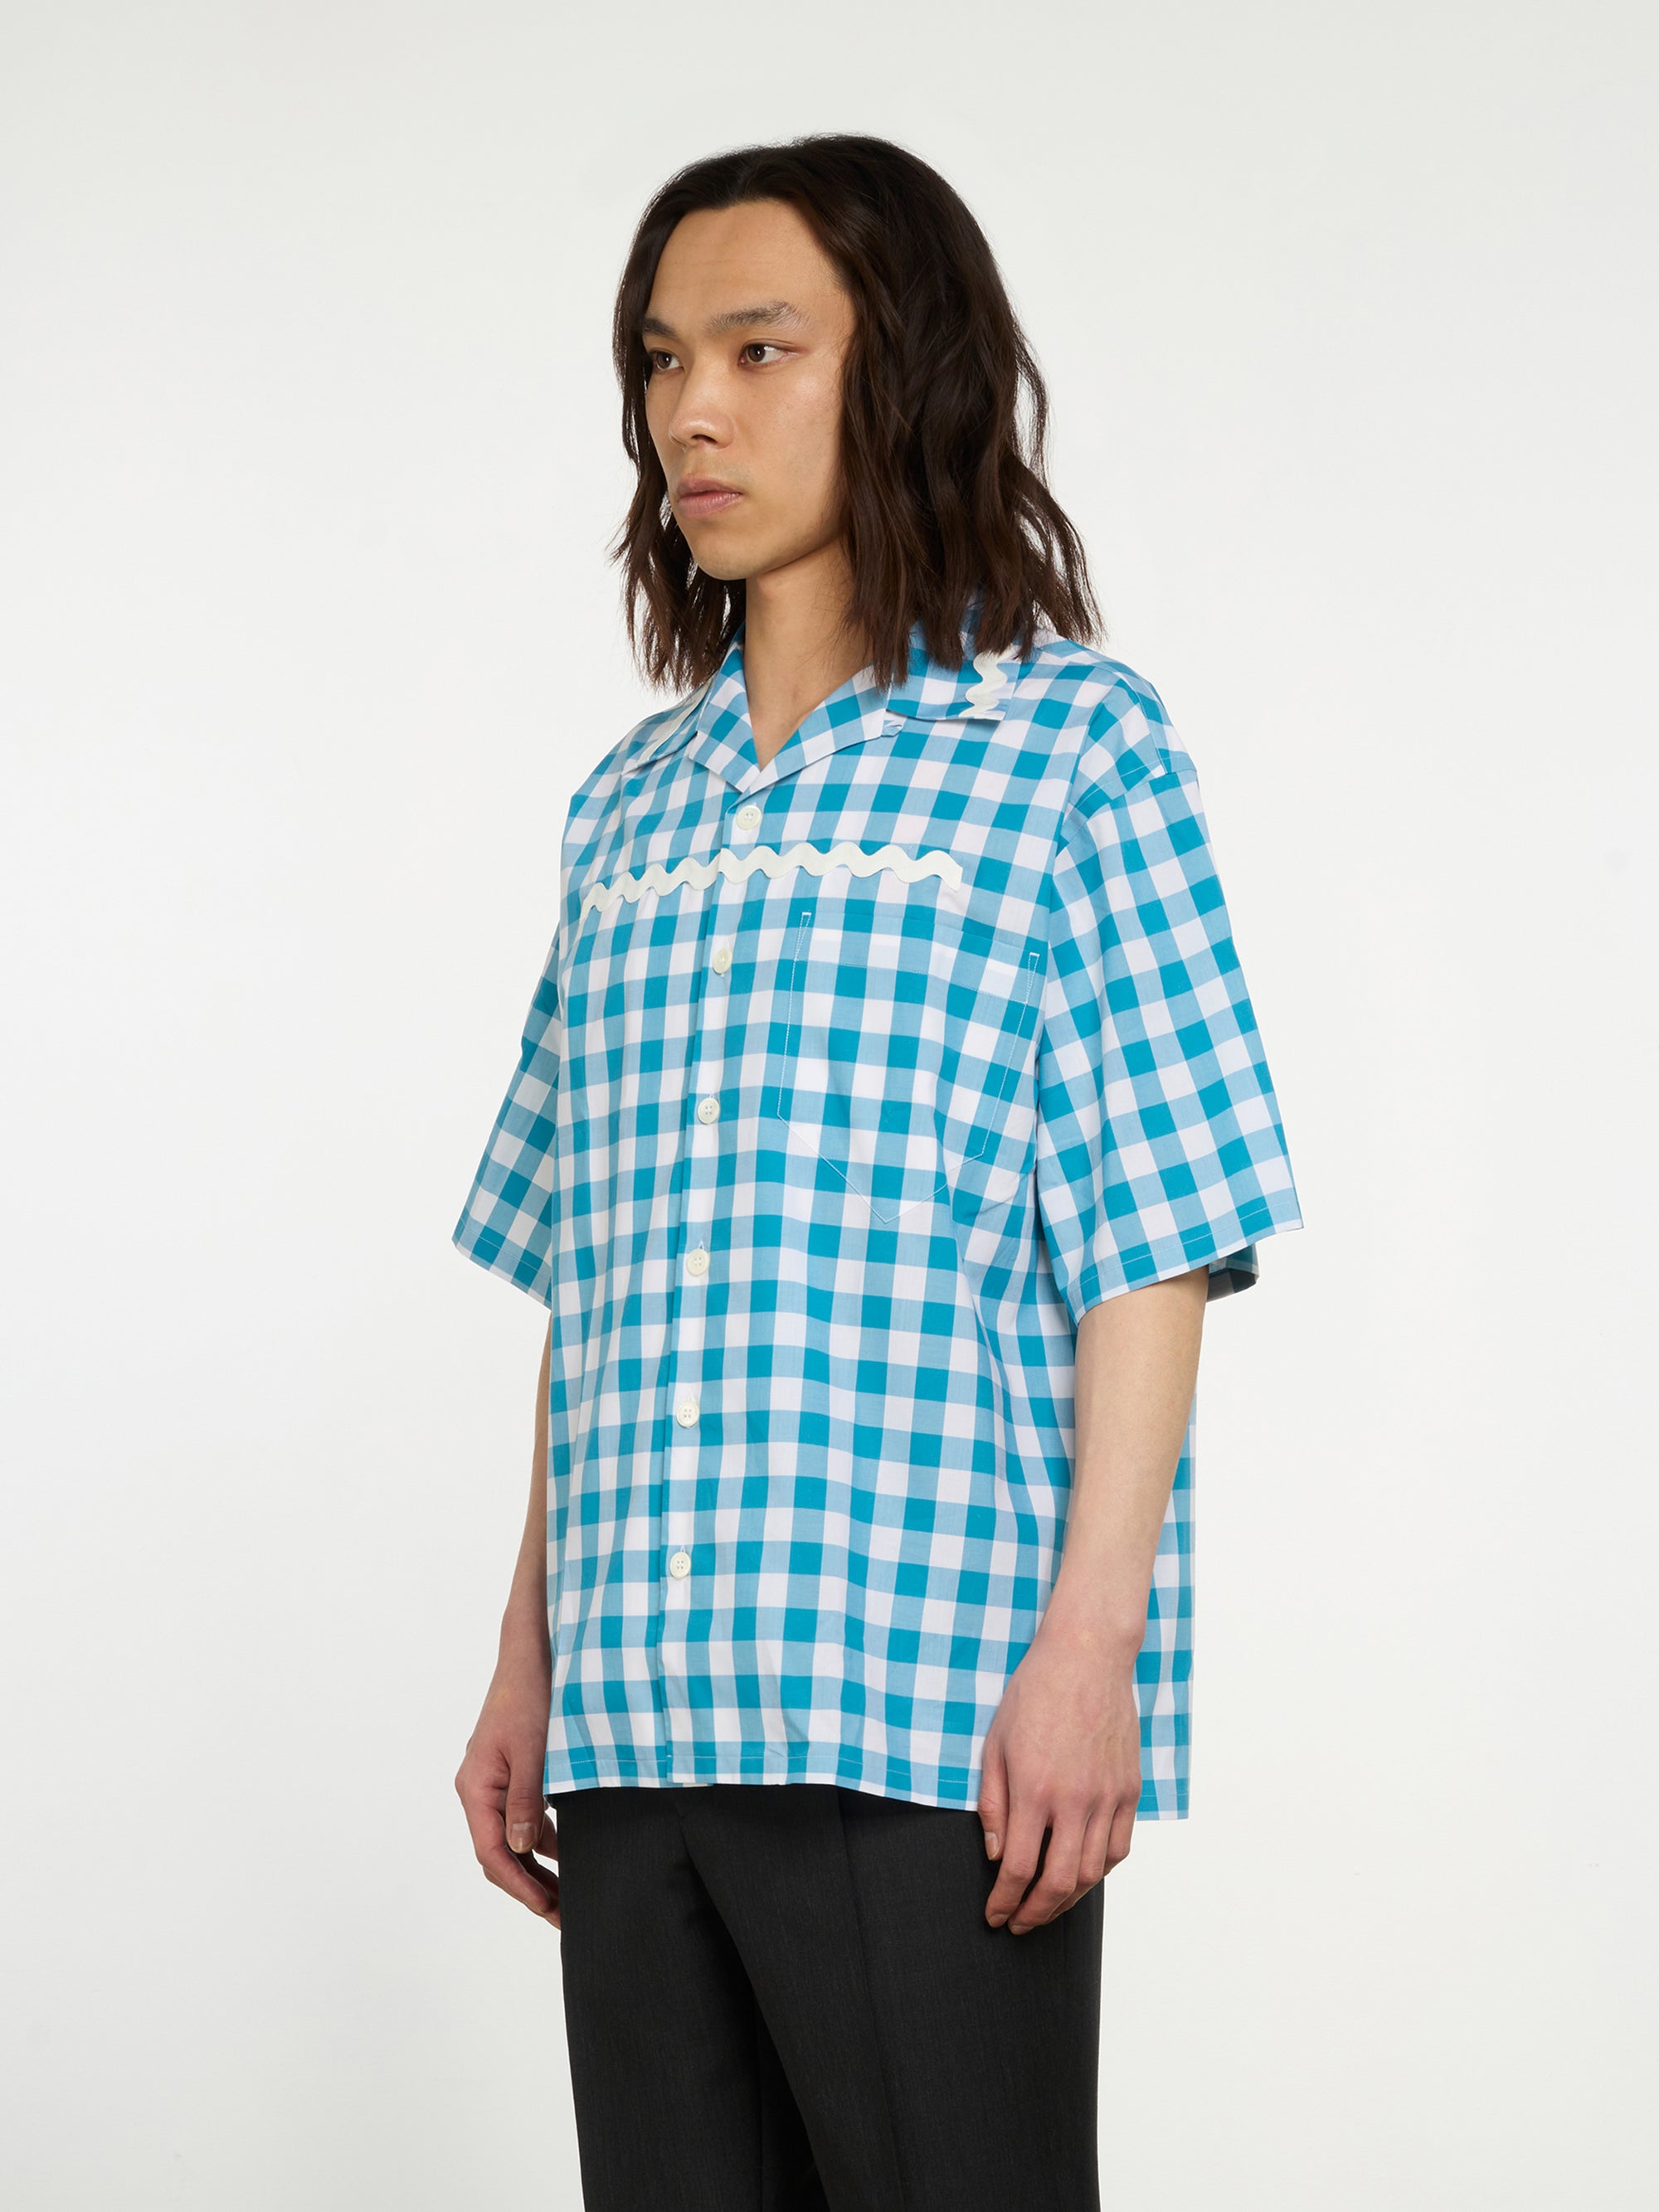 Prada - Men’s Check Shirt - (White/Turquoise) view 2